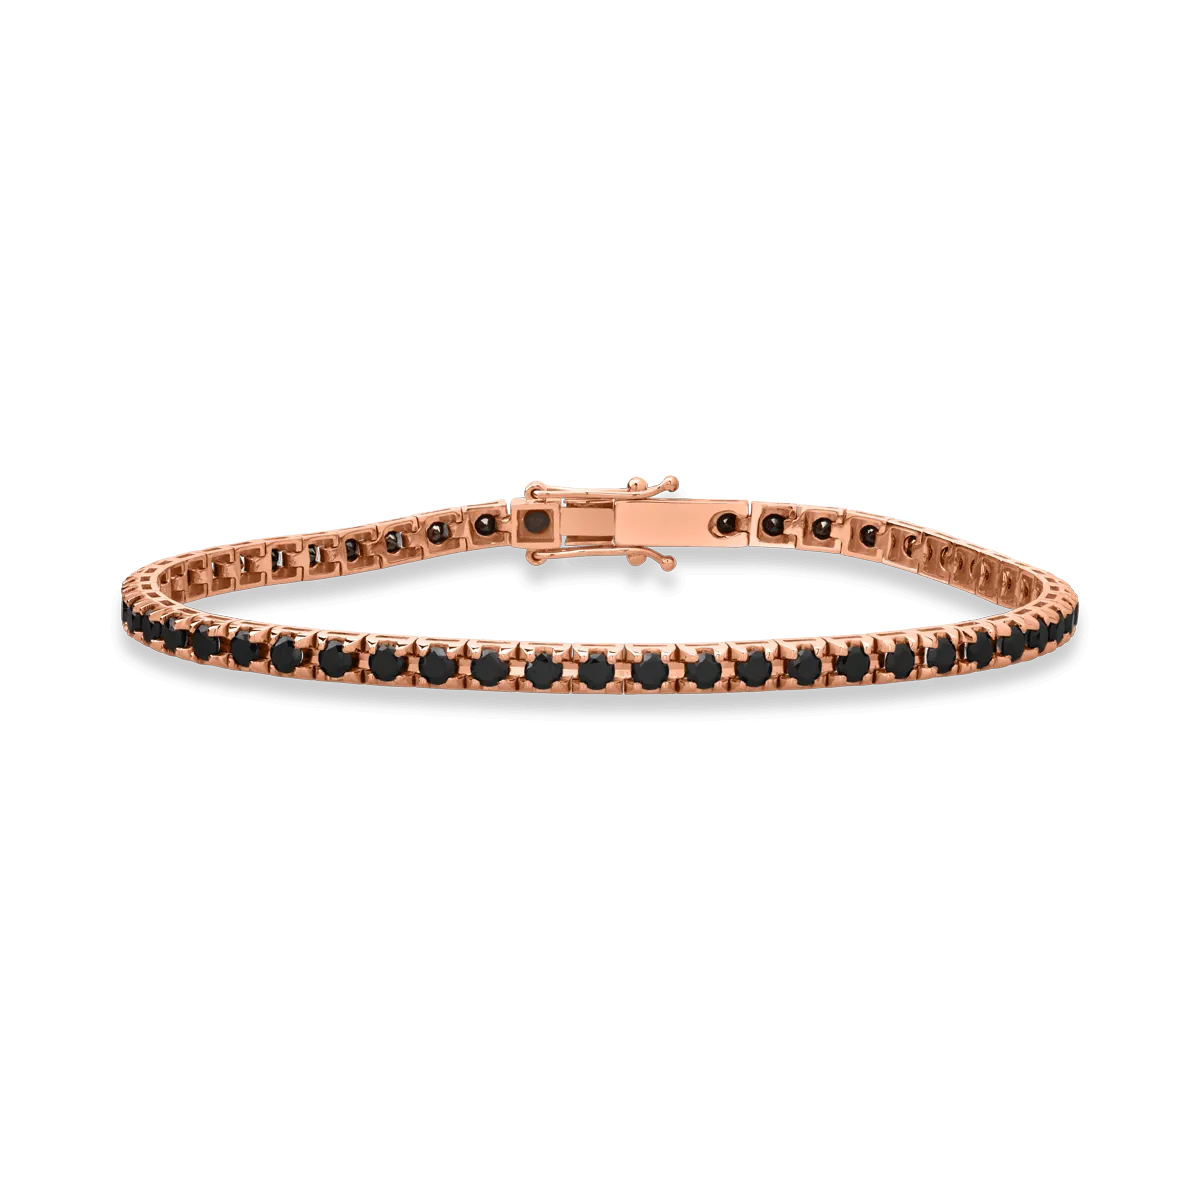 18K rose gold tennis bracelet with 3.8ct black diamonds